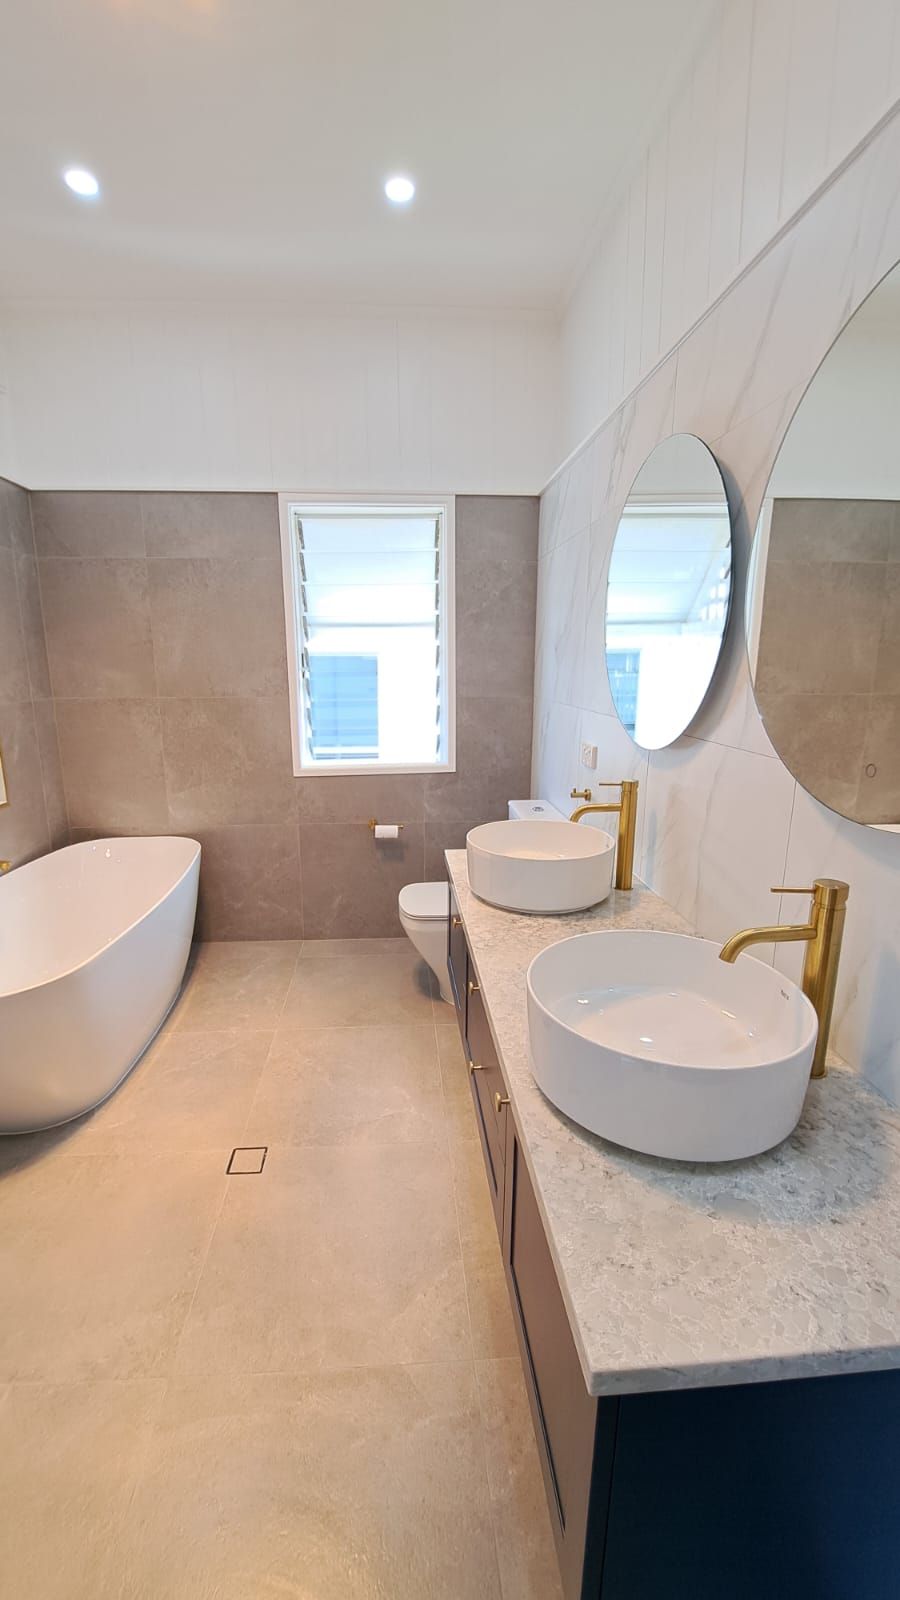 Completed bathroom reno in Sydney